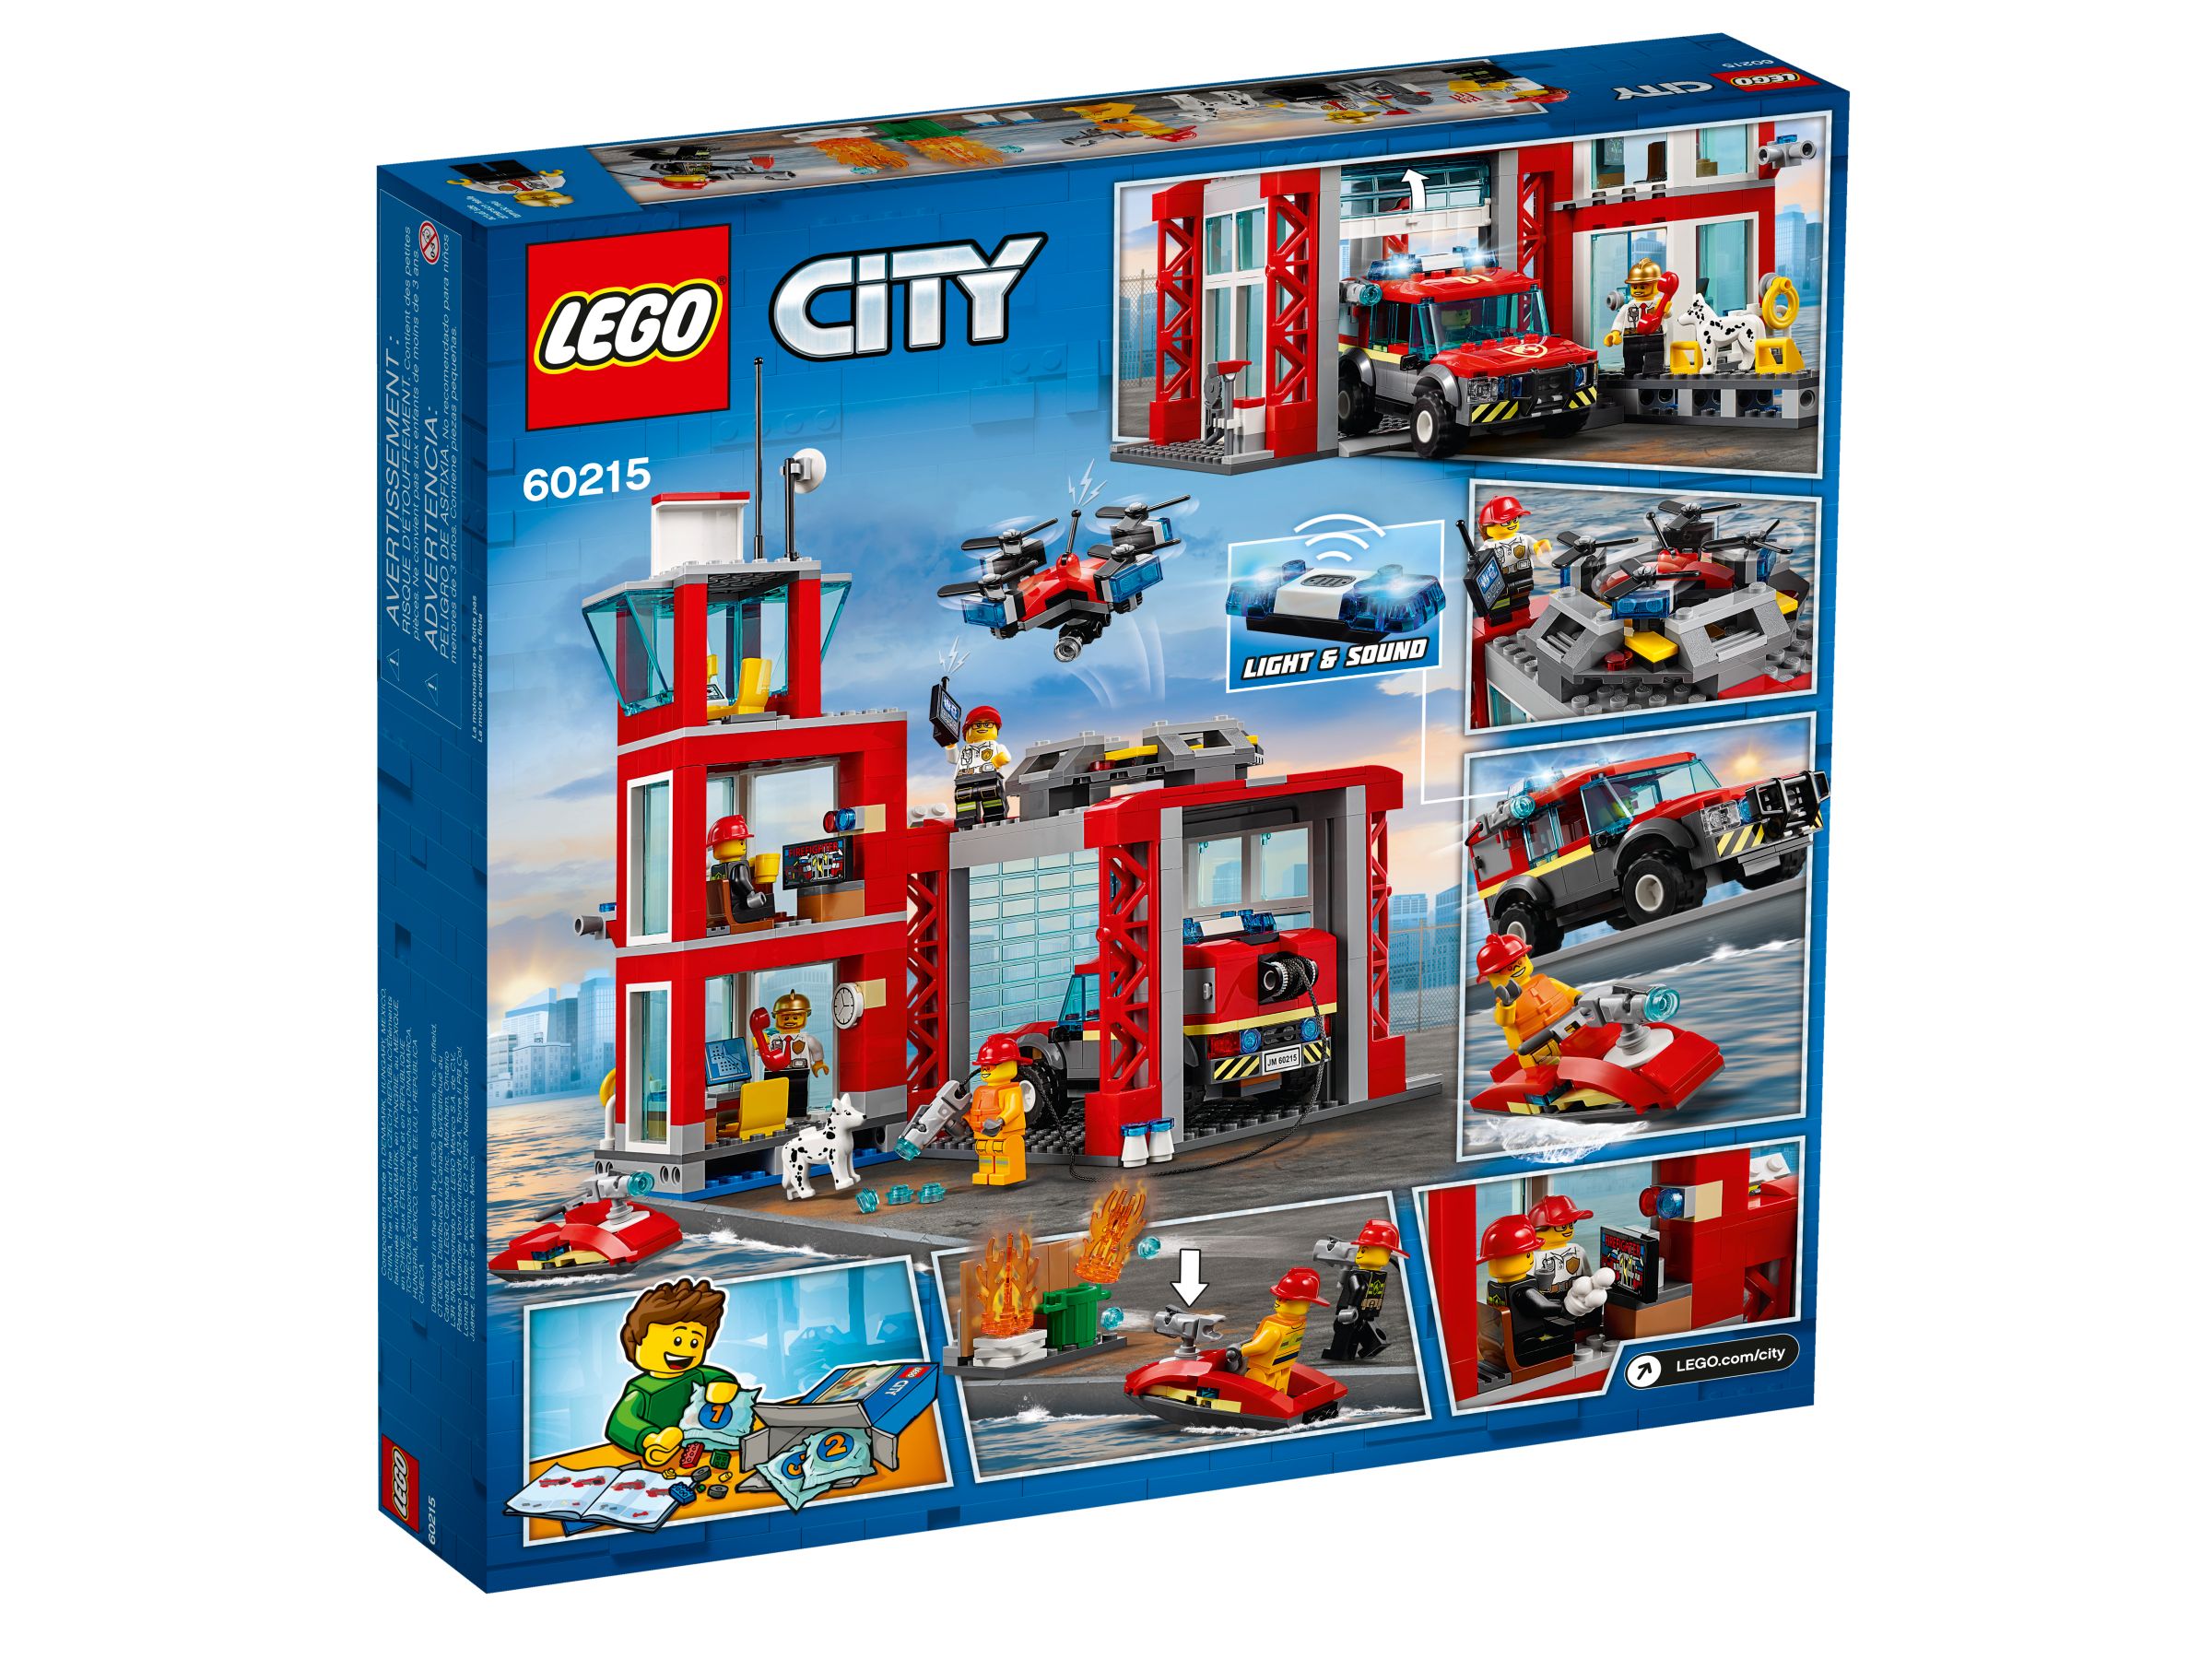 LEGO City 60215 Feuerwehrstation LEGO_60215_alt4.jpg